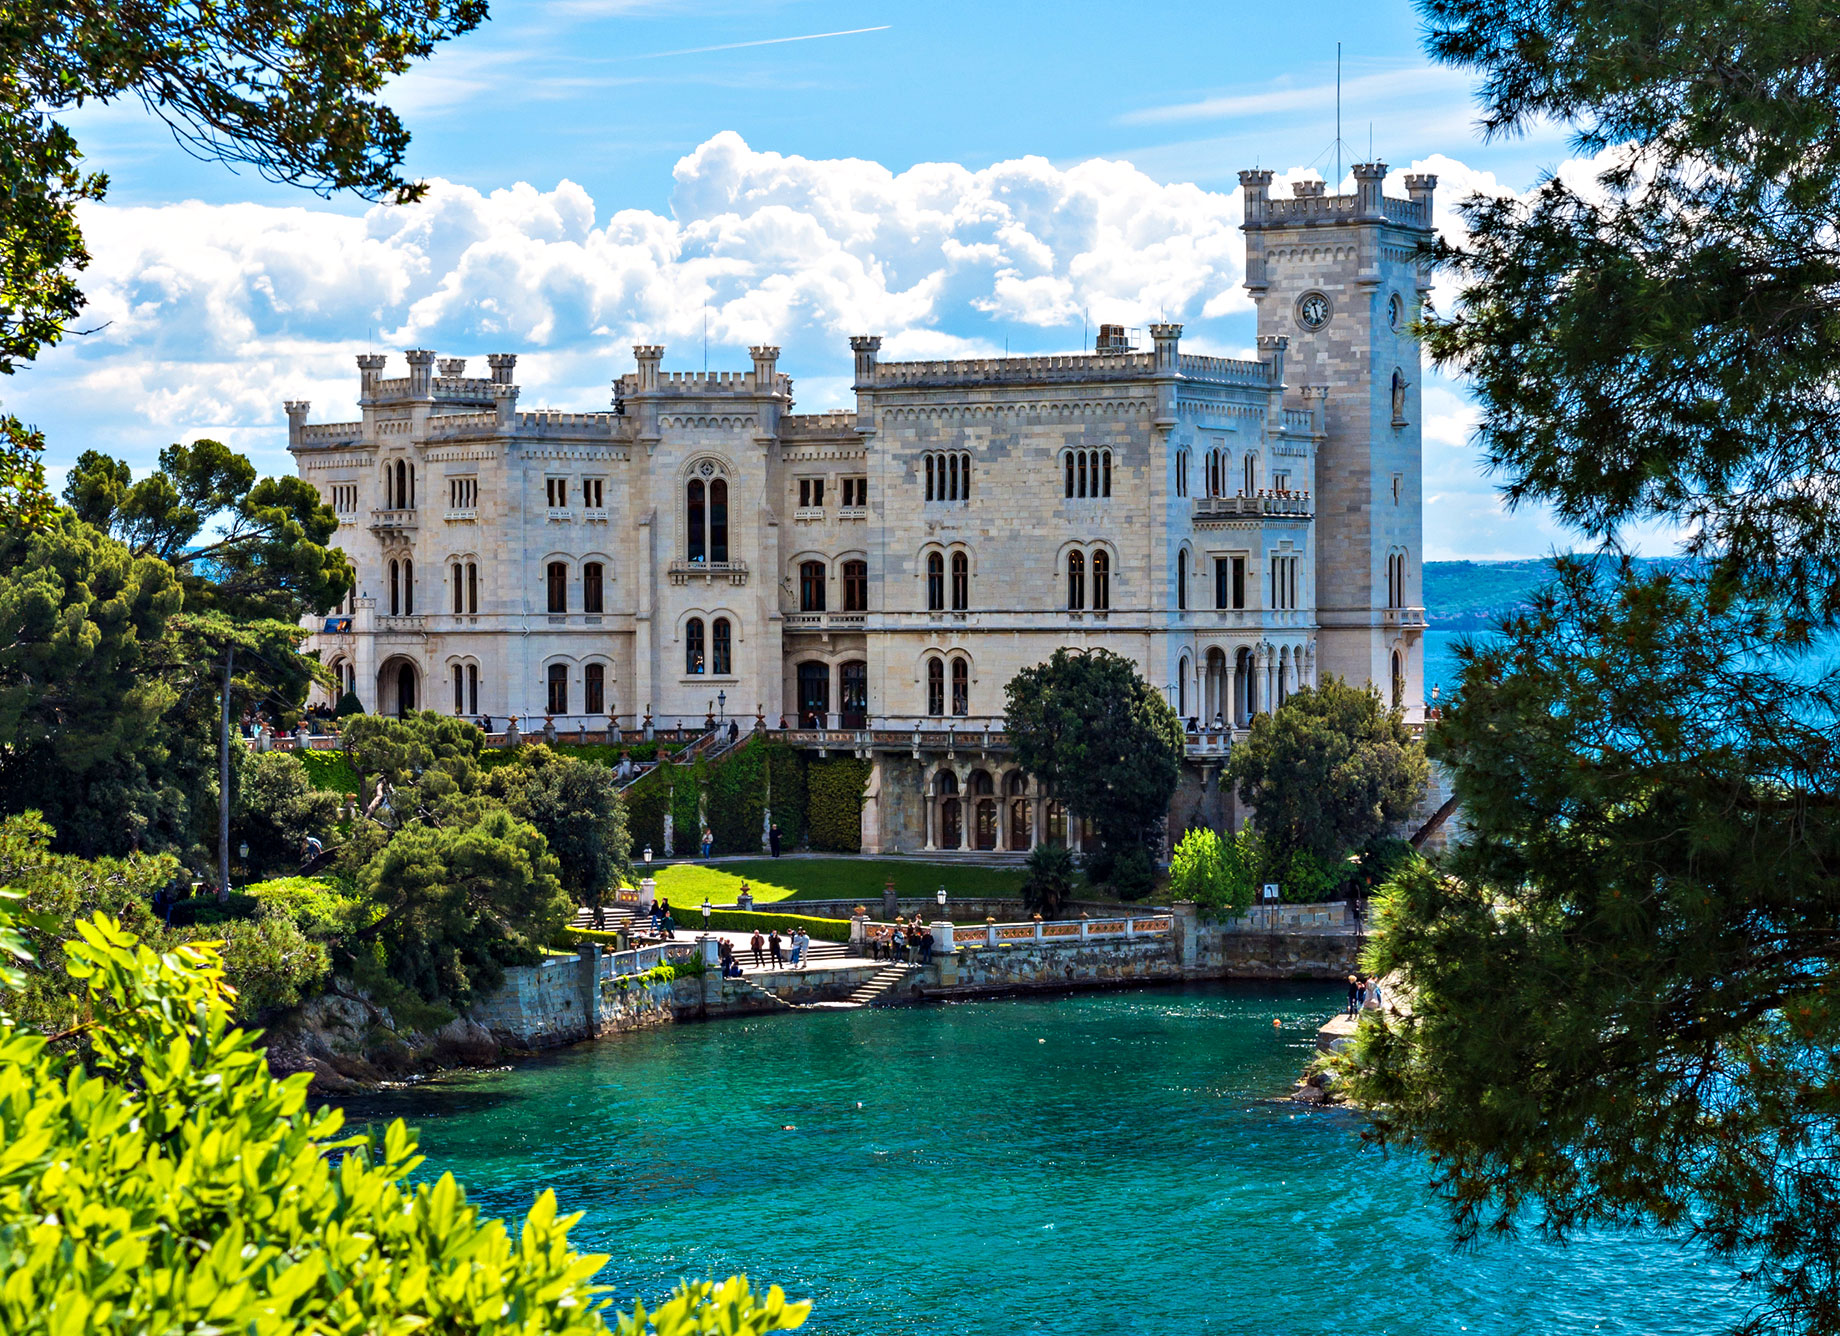 Miramare Castle - Trieste, Italy